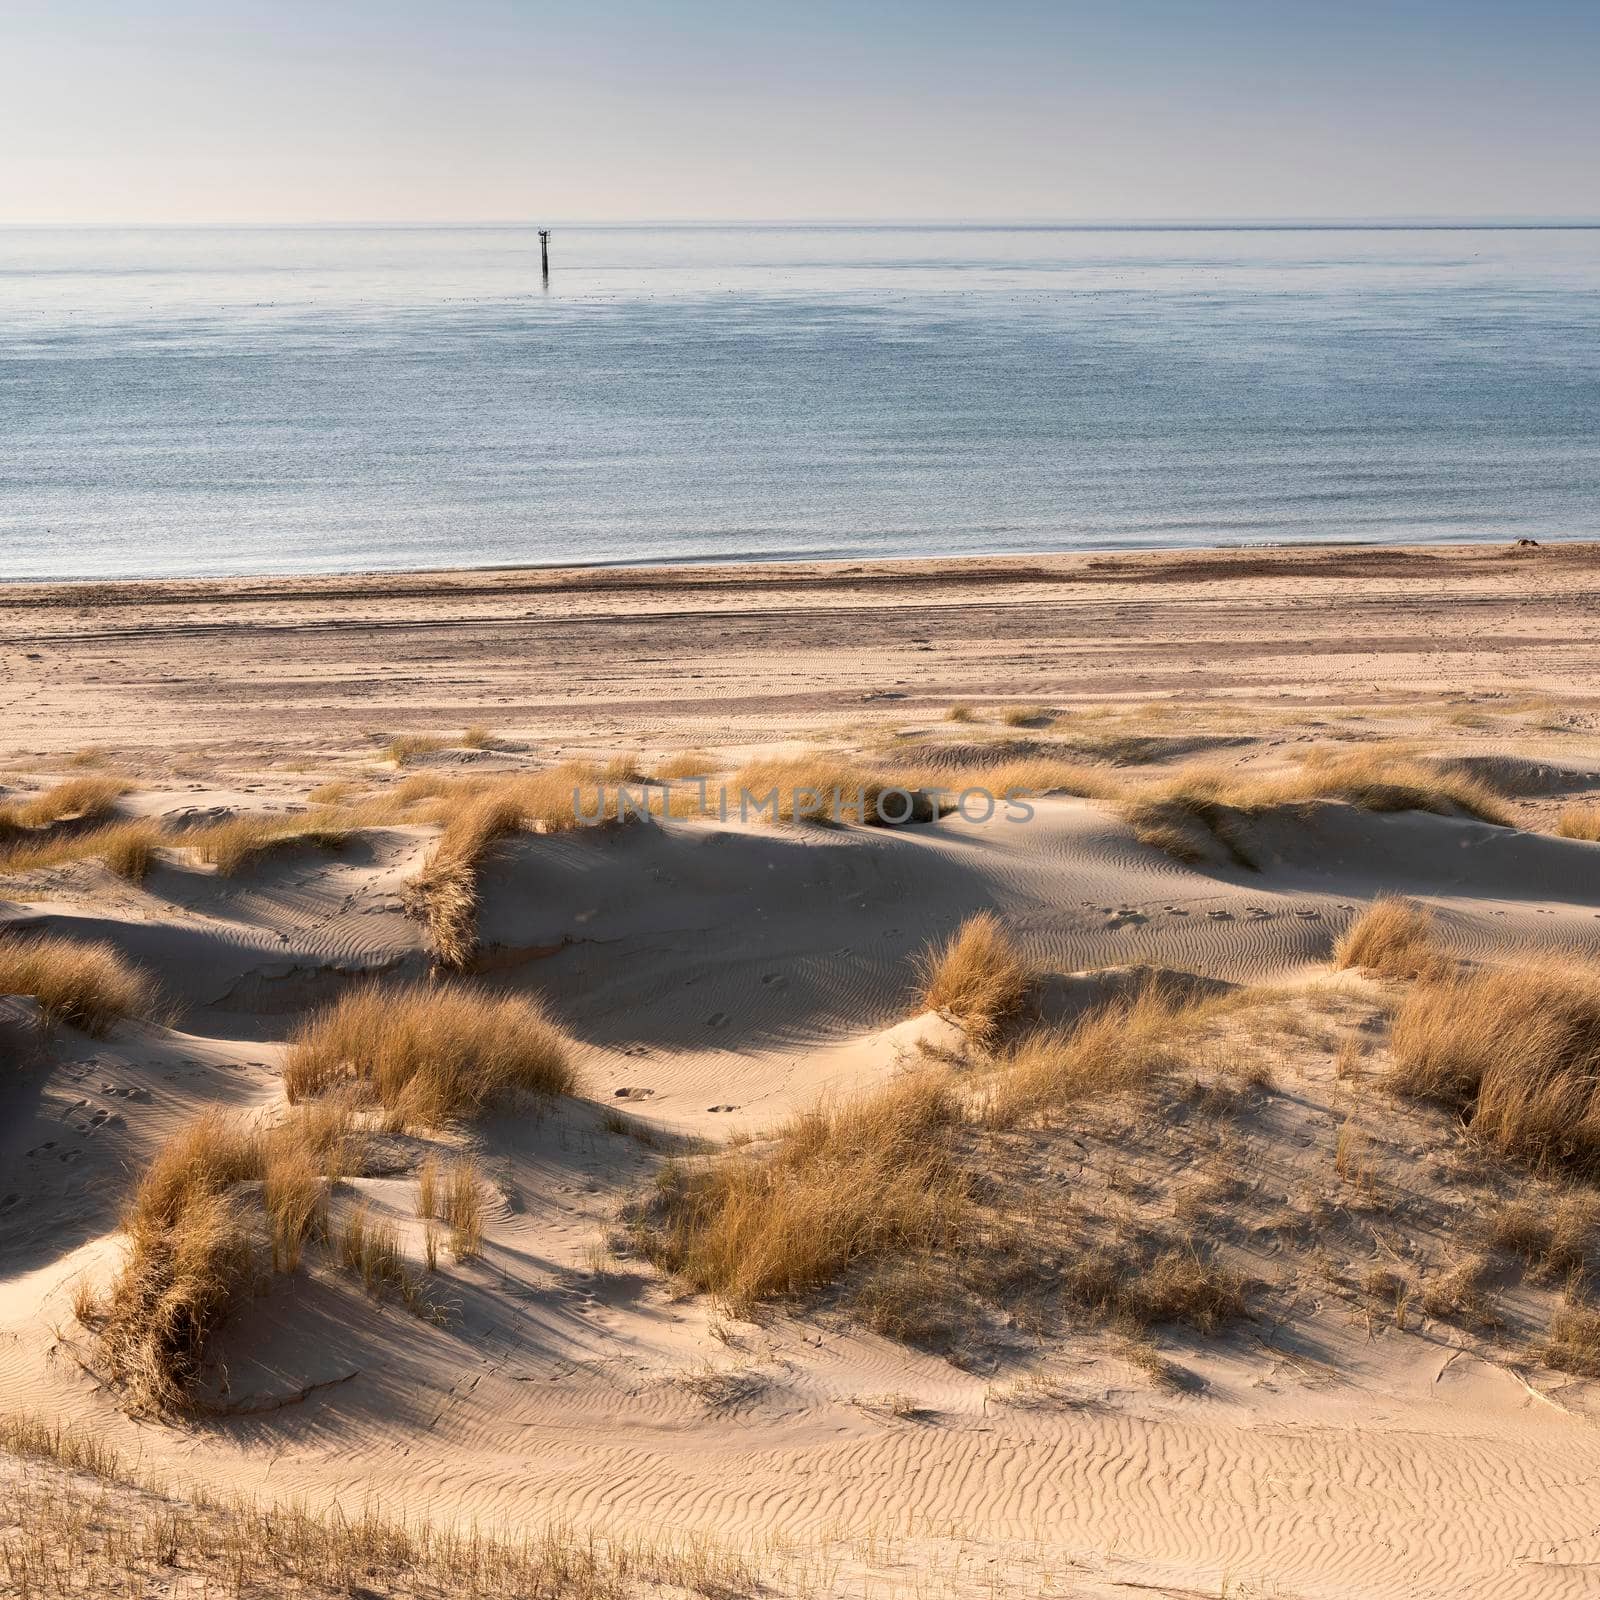 dunes and almost deserted beach on dutch coast near renesse in zeeland under blue sky by ahavelaar